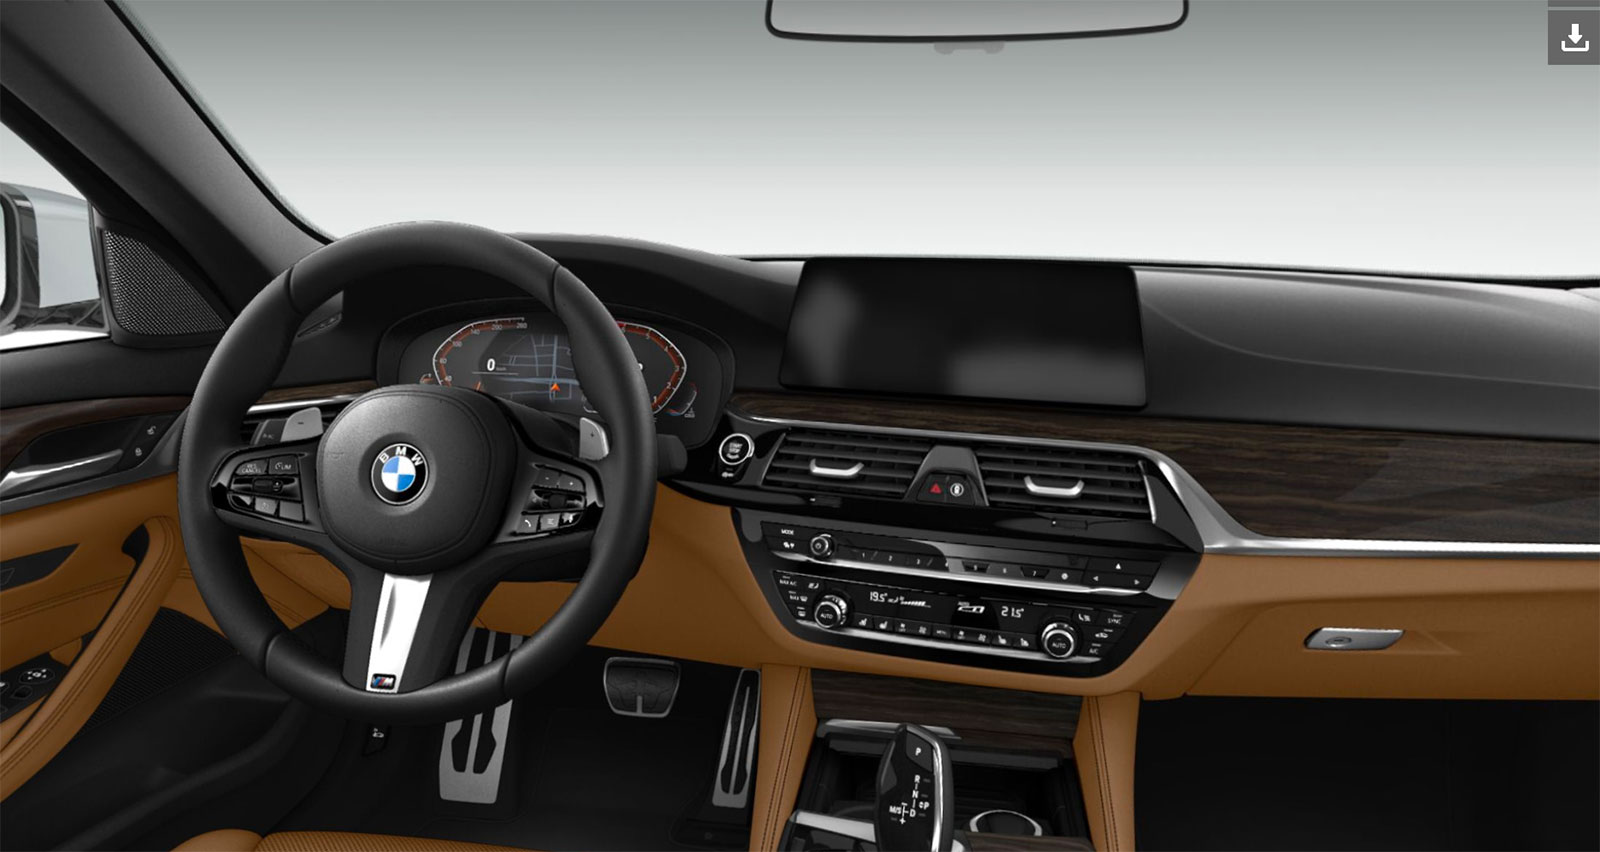 BMW online configurator shows the Live Cockpit Professional